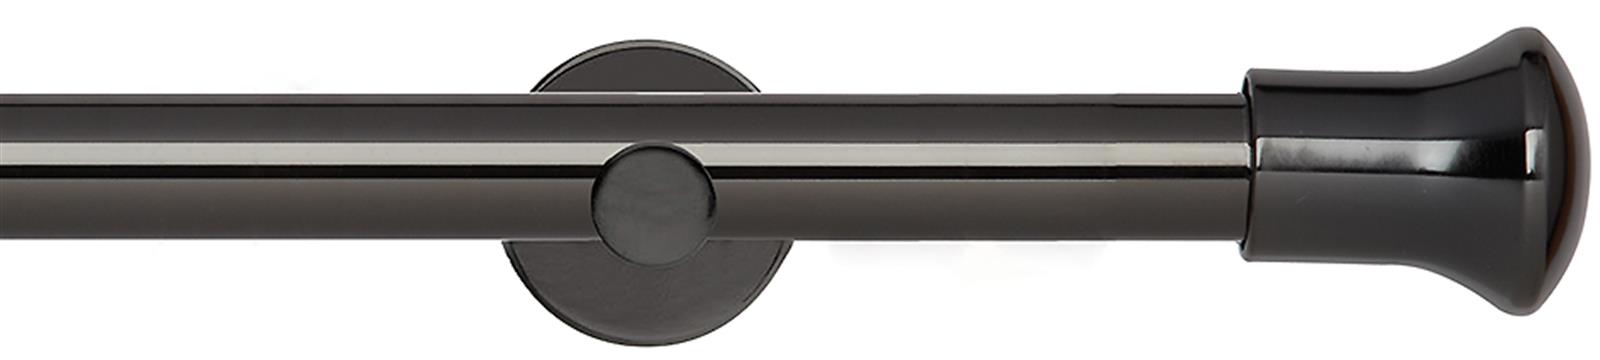 Neo 28mm Eyelet Pole Black Nickel Cylinder Trumpet